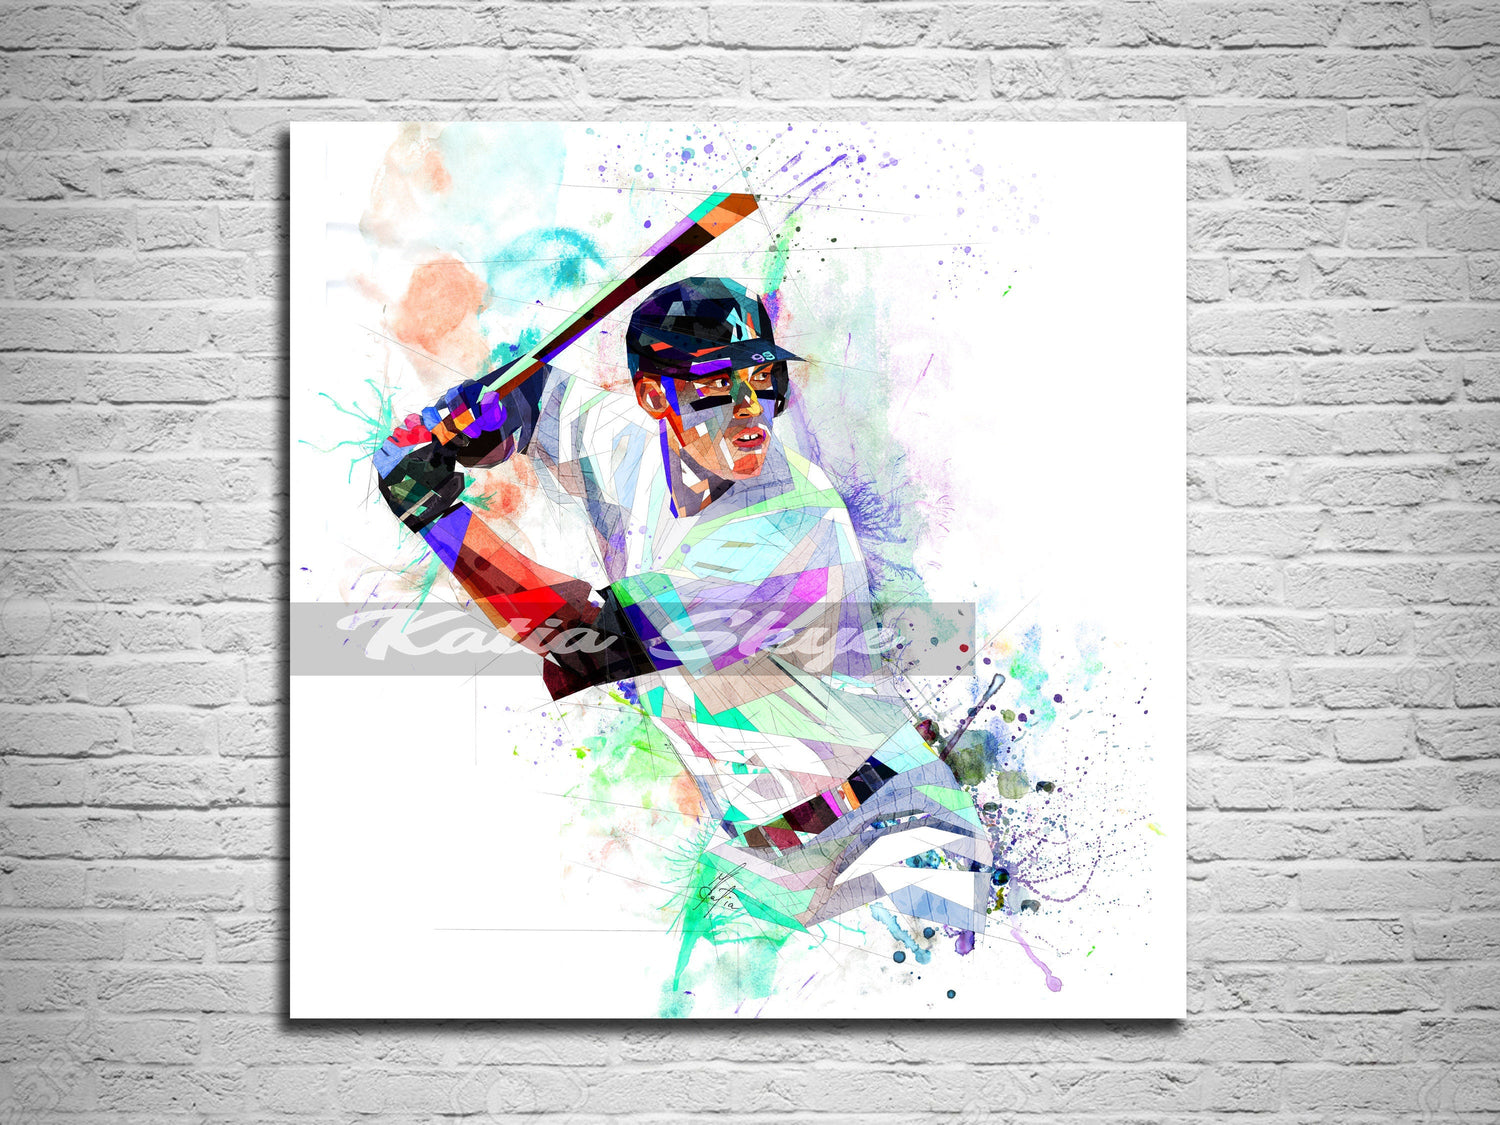 Buy Aaron Judge Baseball CANVAS PRINT Wall Art Decor